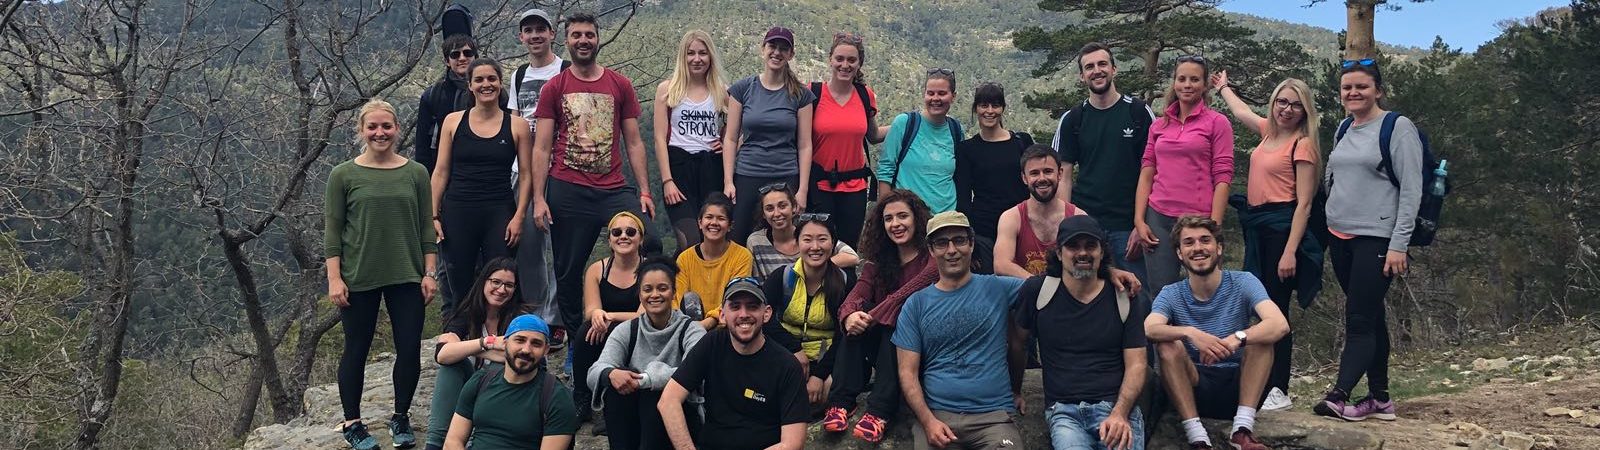 Hiking, Health, and Happiness: Benefit Hike and Yoga, 05.05.2018